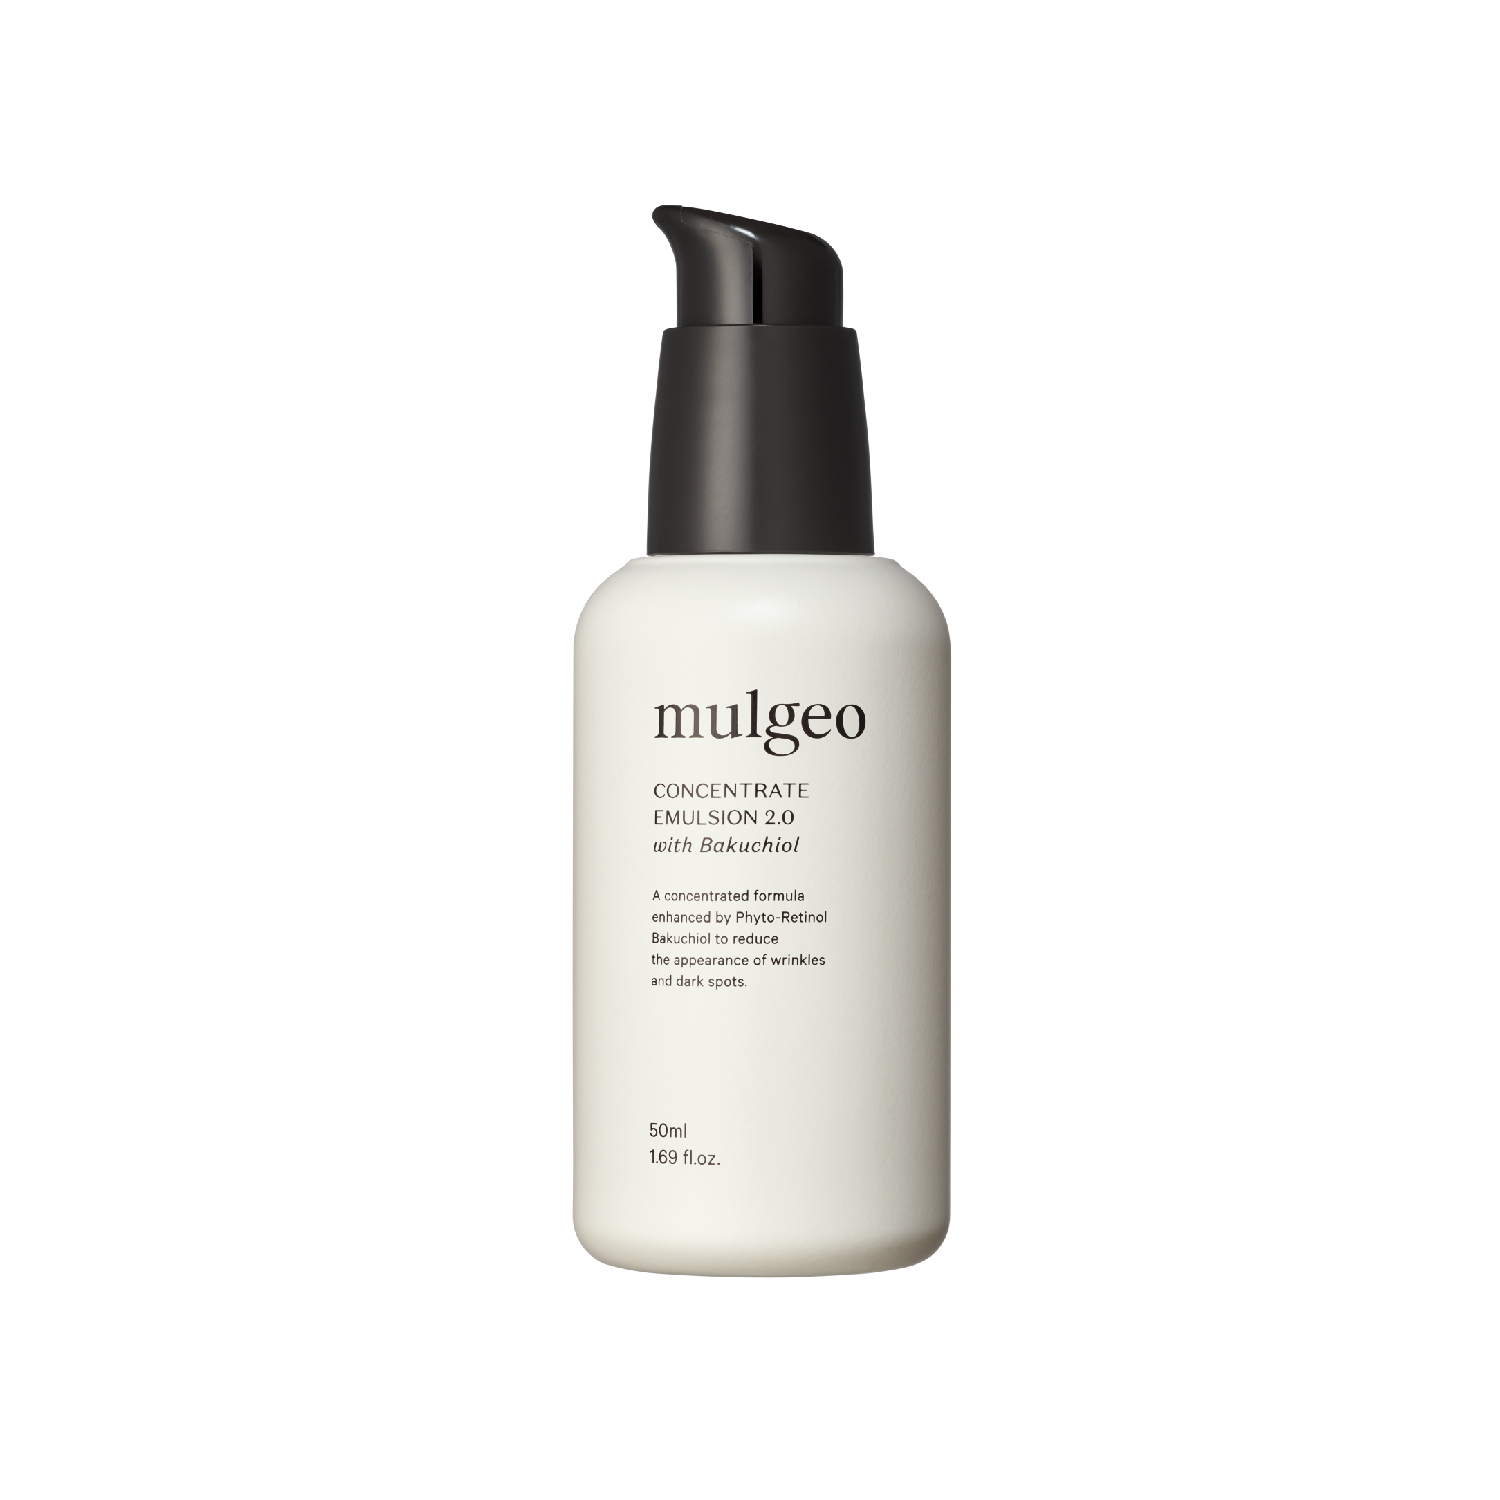 Tinh chất dưỡng da Mulgeo Concentrate emulsion 2.0 (Hộp 50ml)